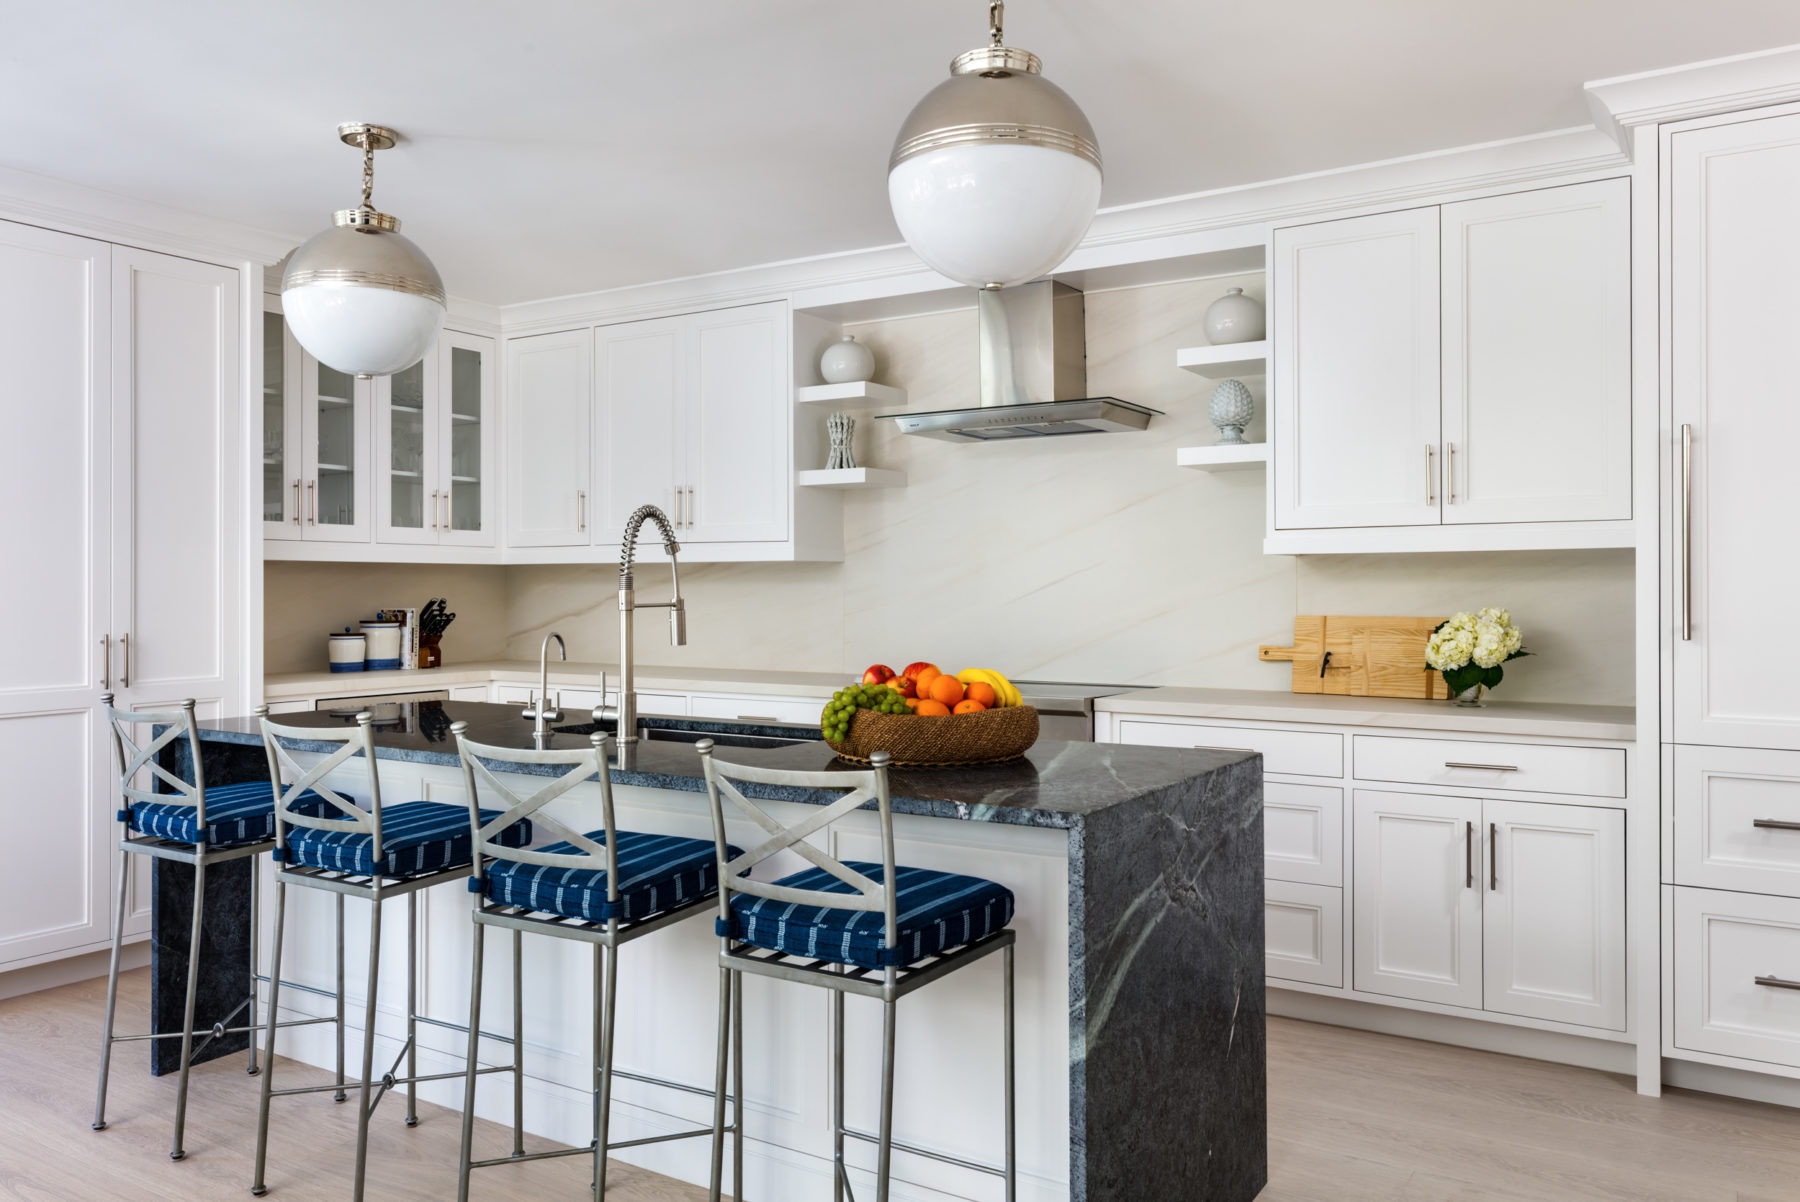 image of Winthrop House Condo kitchen with natural stone backsplash, white cabinets and large globe pendants